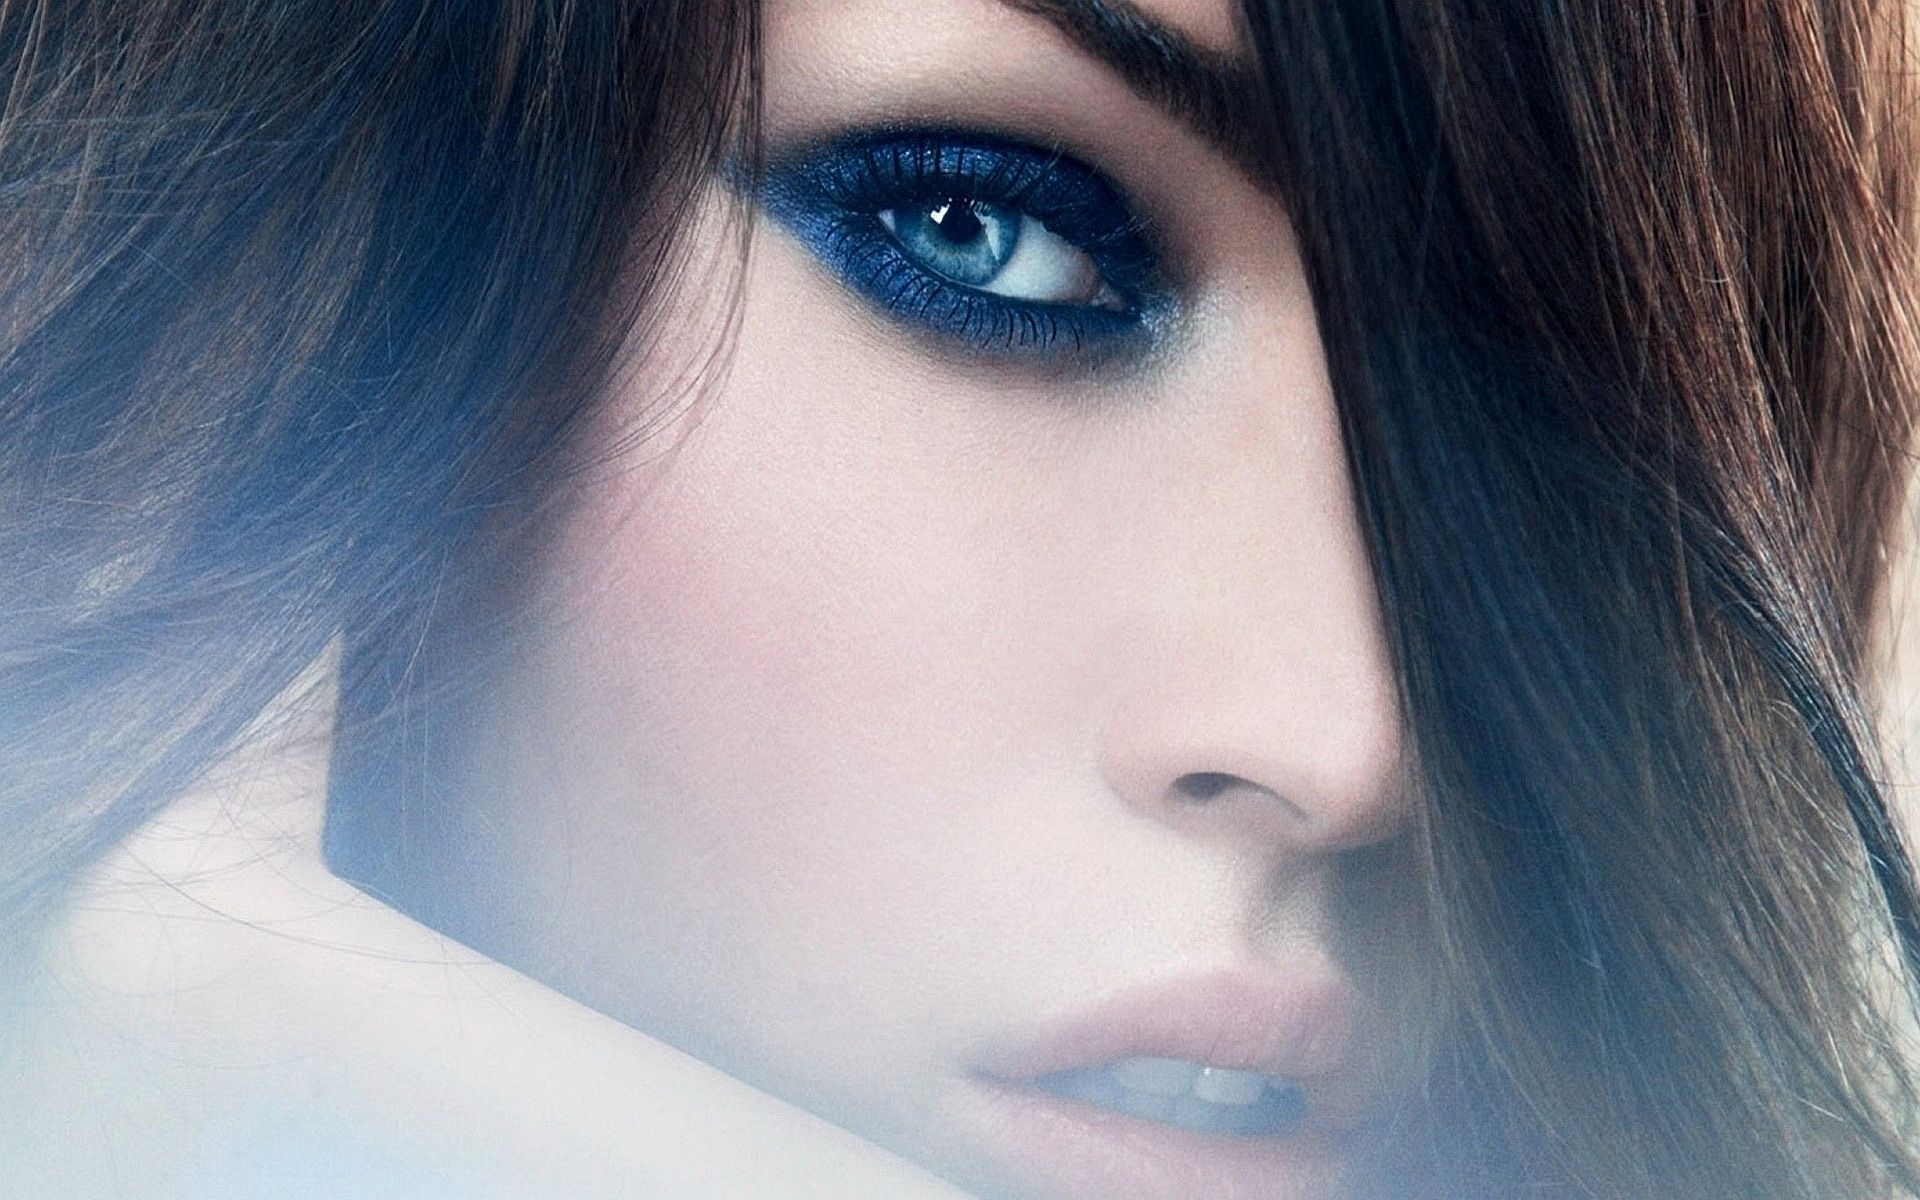 http://2.bp.blogspot.com/-RjNZL9-eV3E/ULBpB9nA5BI/AAAAAAAANik/FgTKOV3eUm8/s1920/megan-fox-blue-eyes-wallpaper.jpg